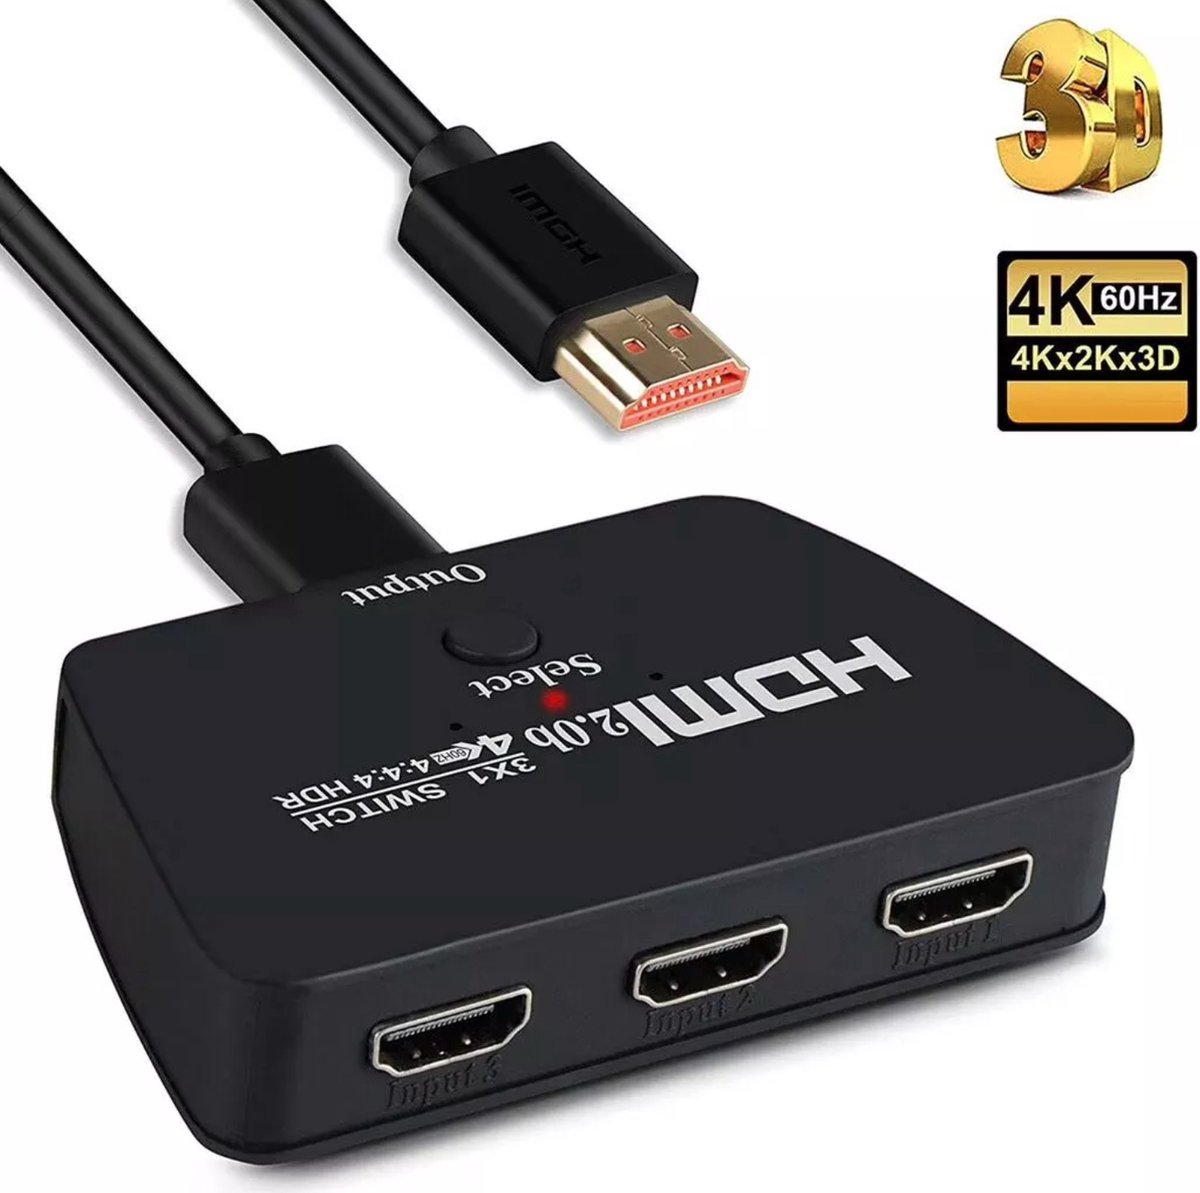 Astilla Products - HDMI Switch 3 in 1 - 4K HDMI Splitter 60Hz inclusief HDMI kabel - 3 Poort Switcher 18.5 Gbps